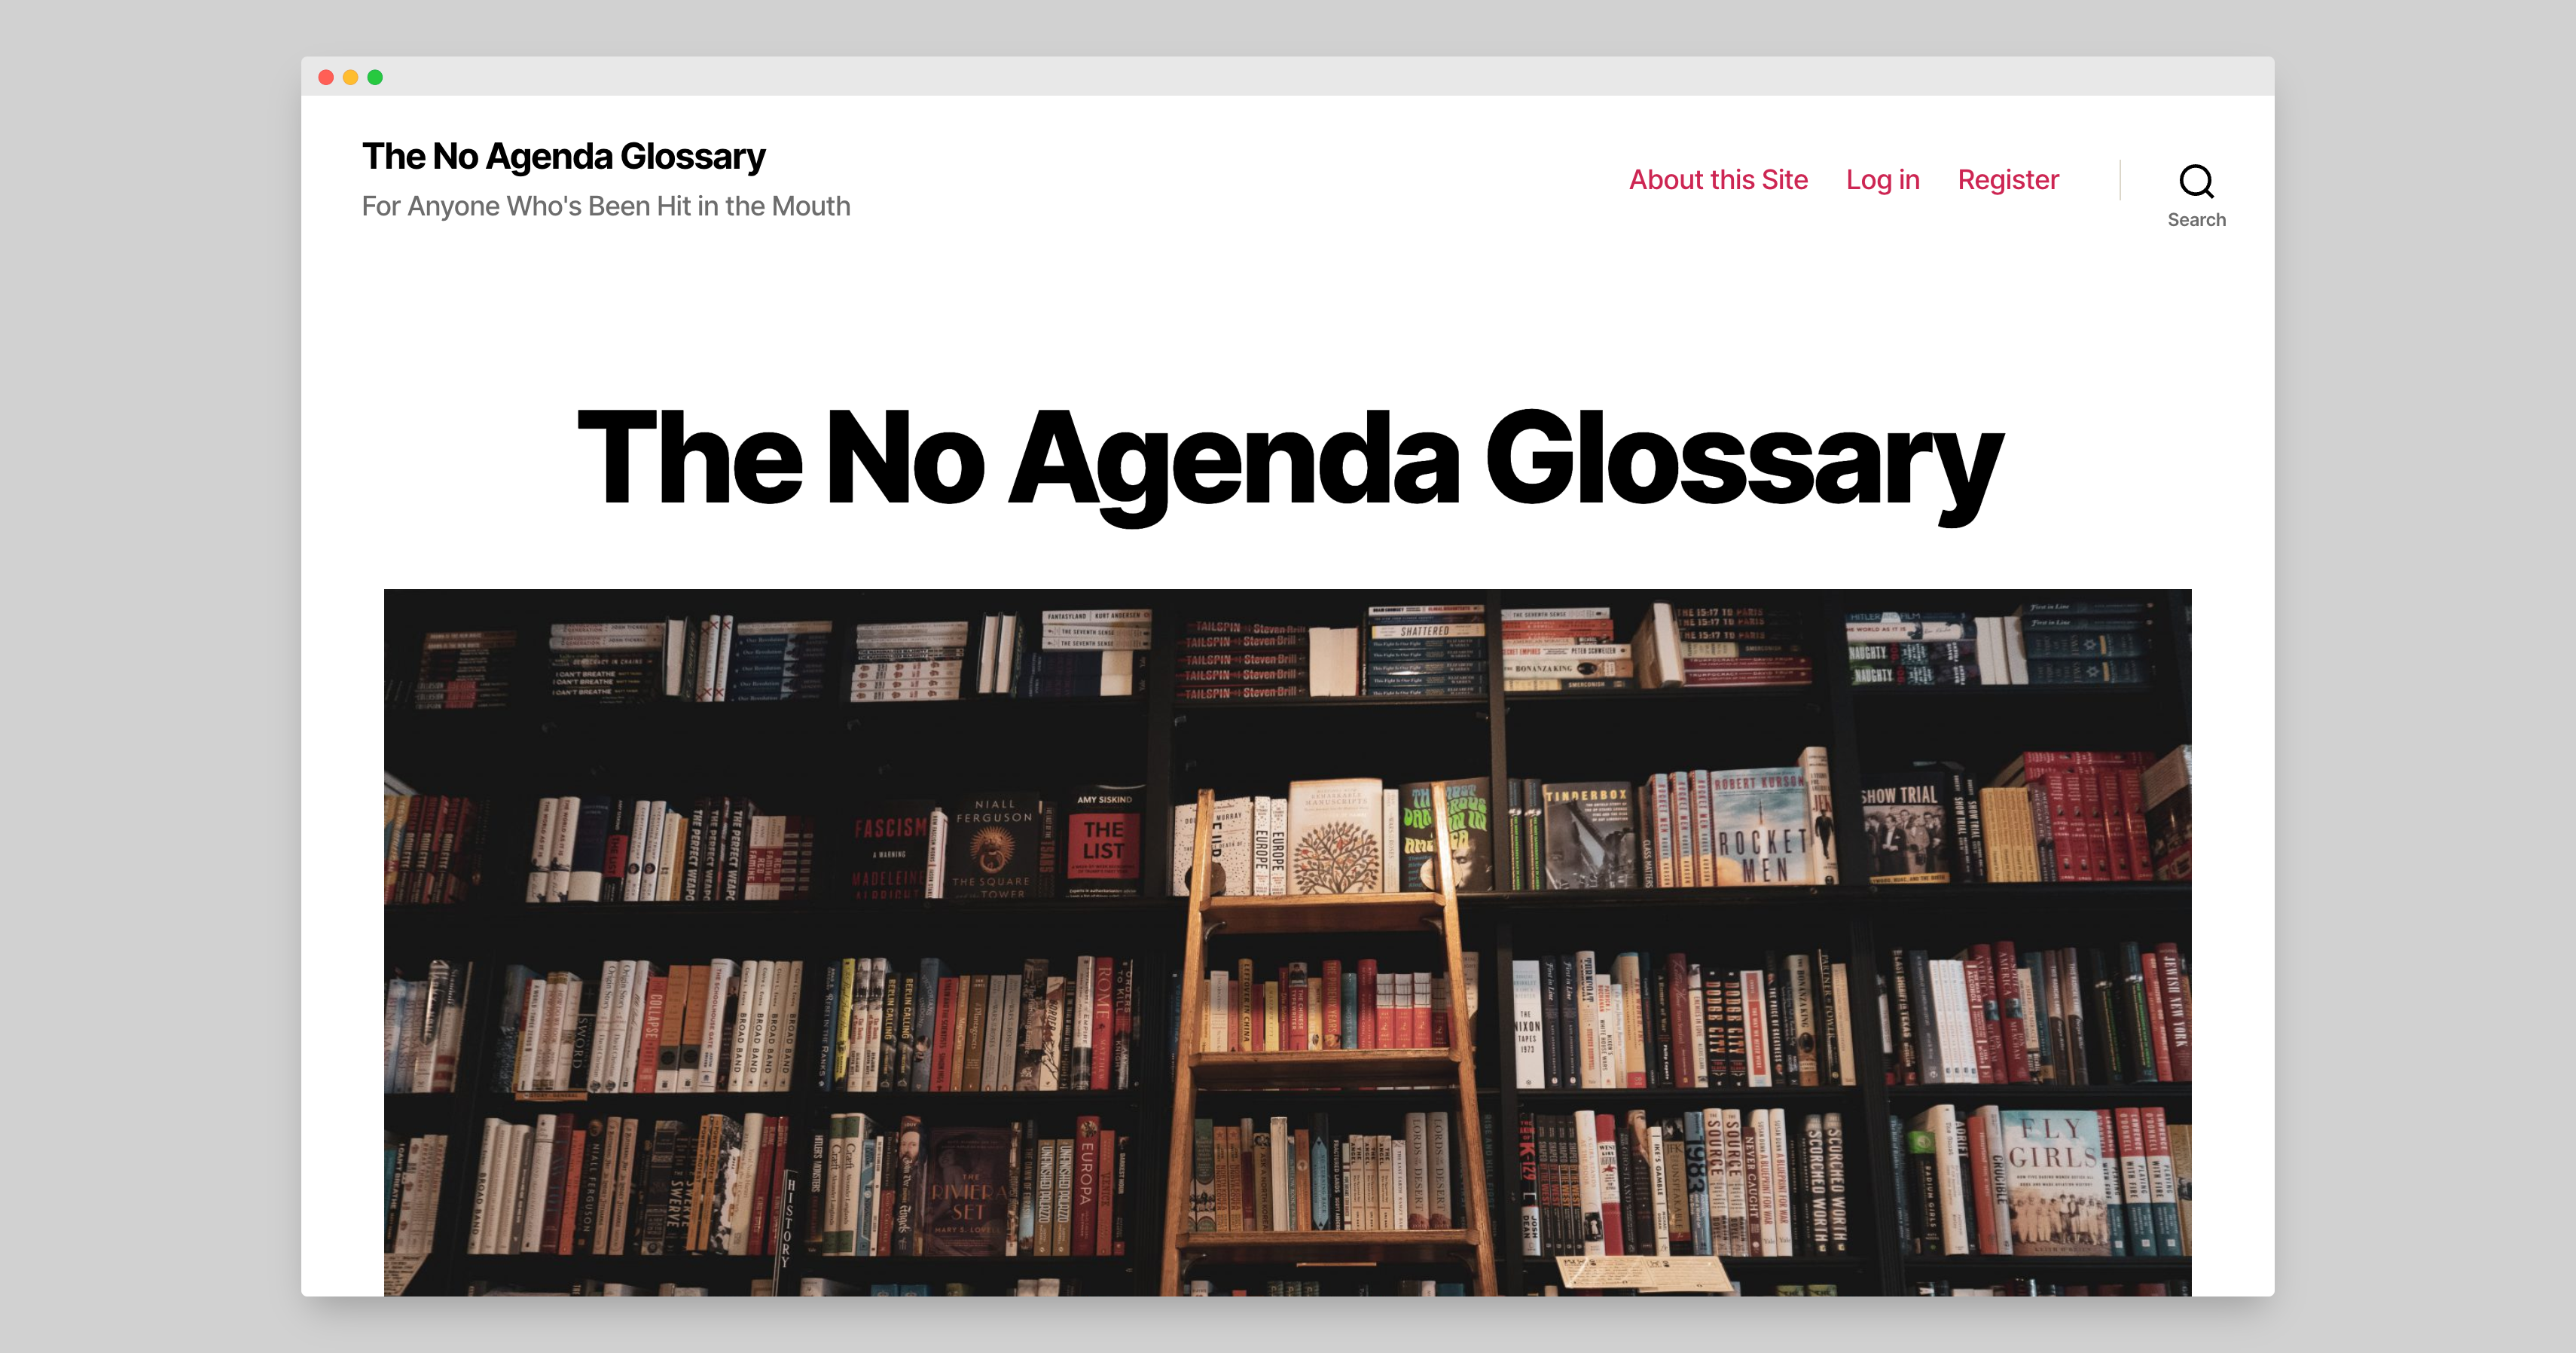 The No Agenda Glossary